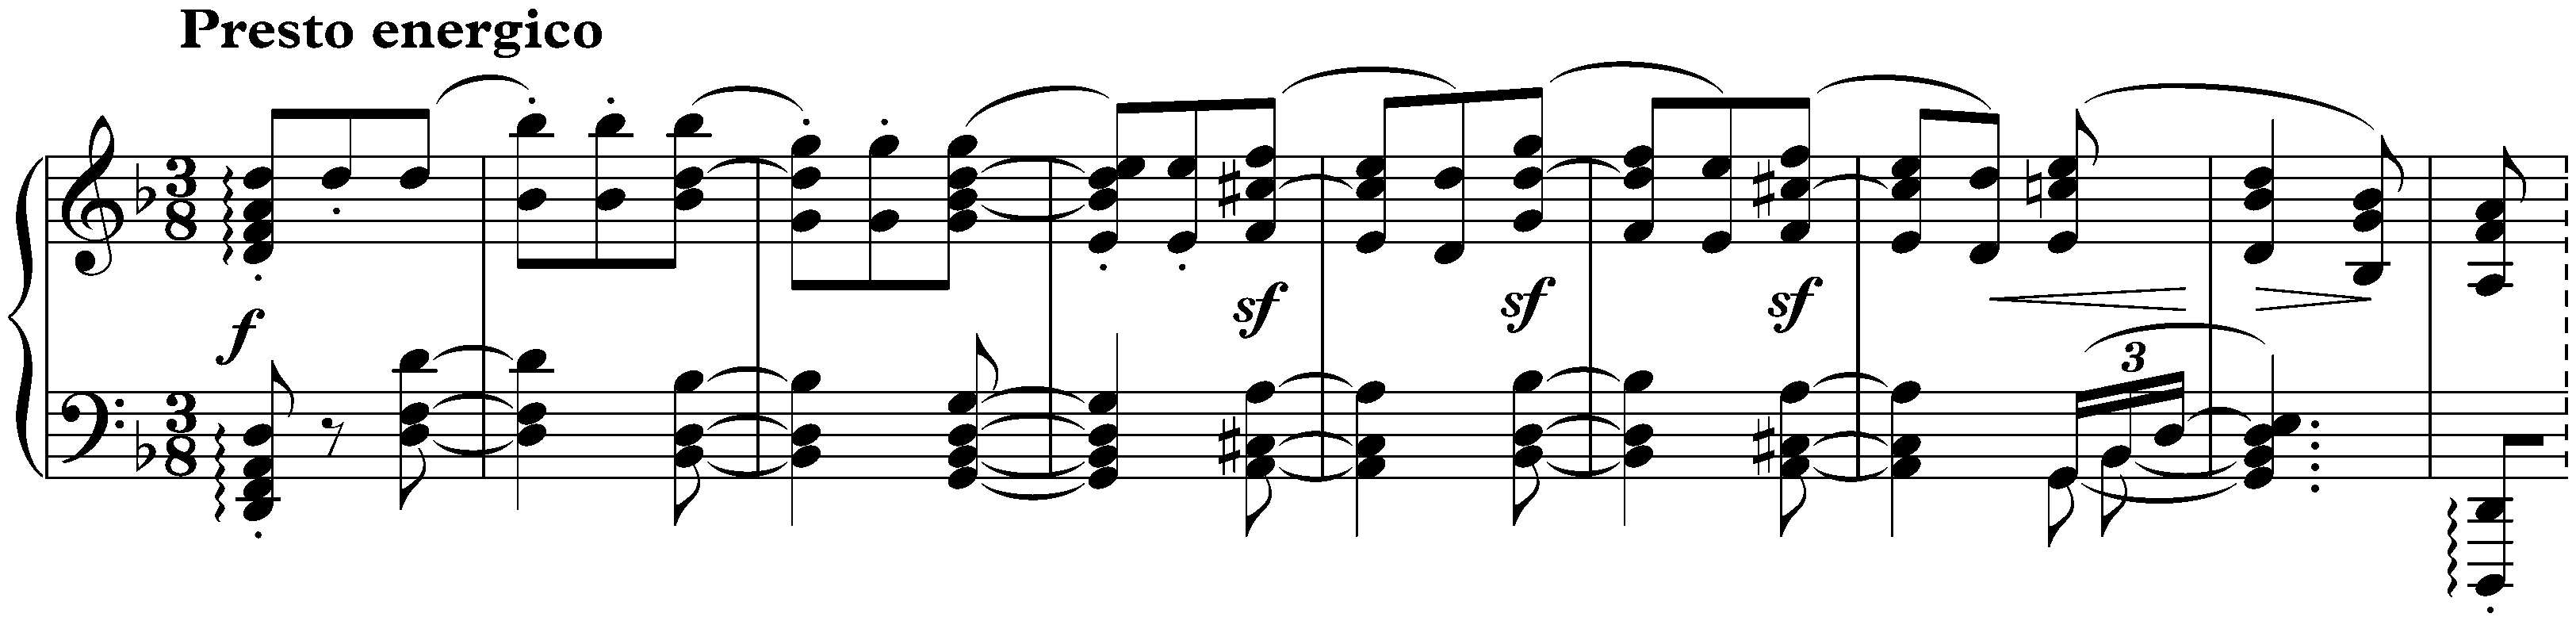 Seven Fantasies, op. 116; 1. Capriccio in D minor